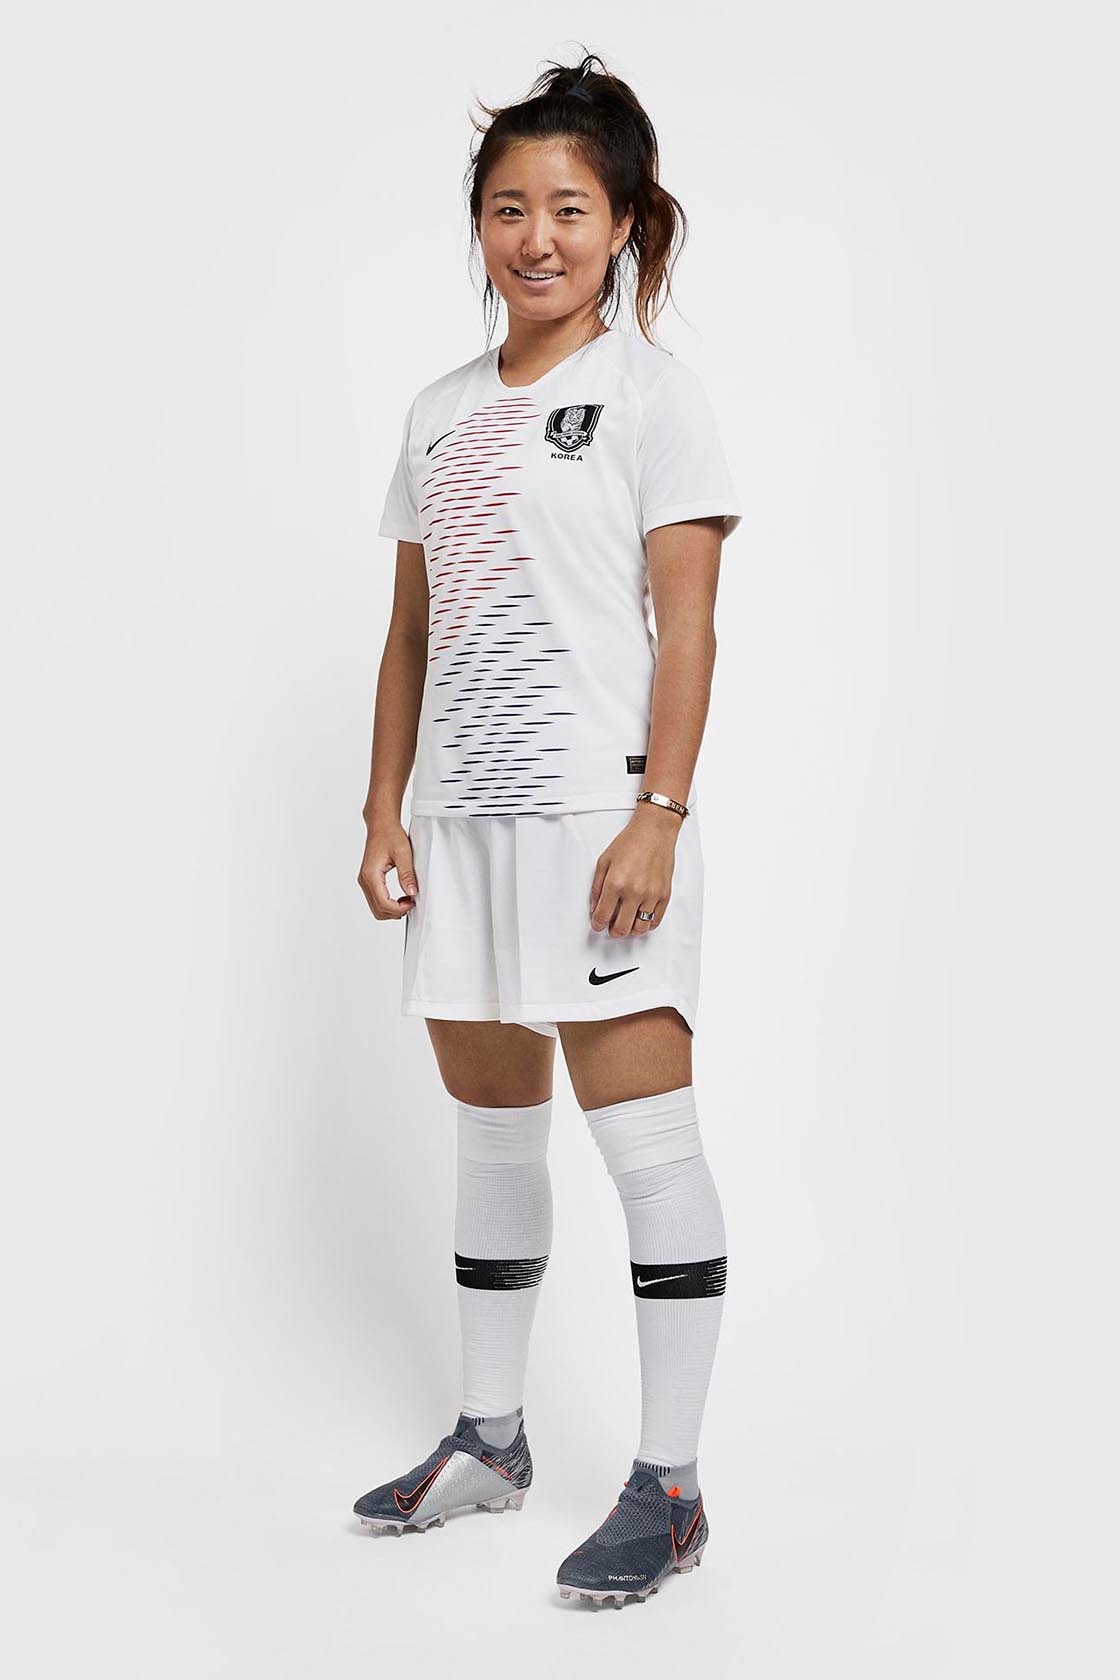 Nike 2019 Women's World Cup Kit Reveal Paris France England USA Canada Brazil China Jerseys